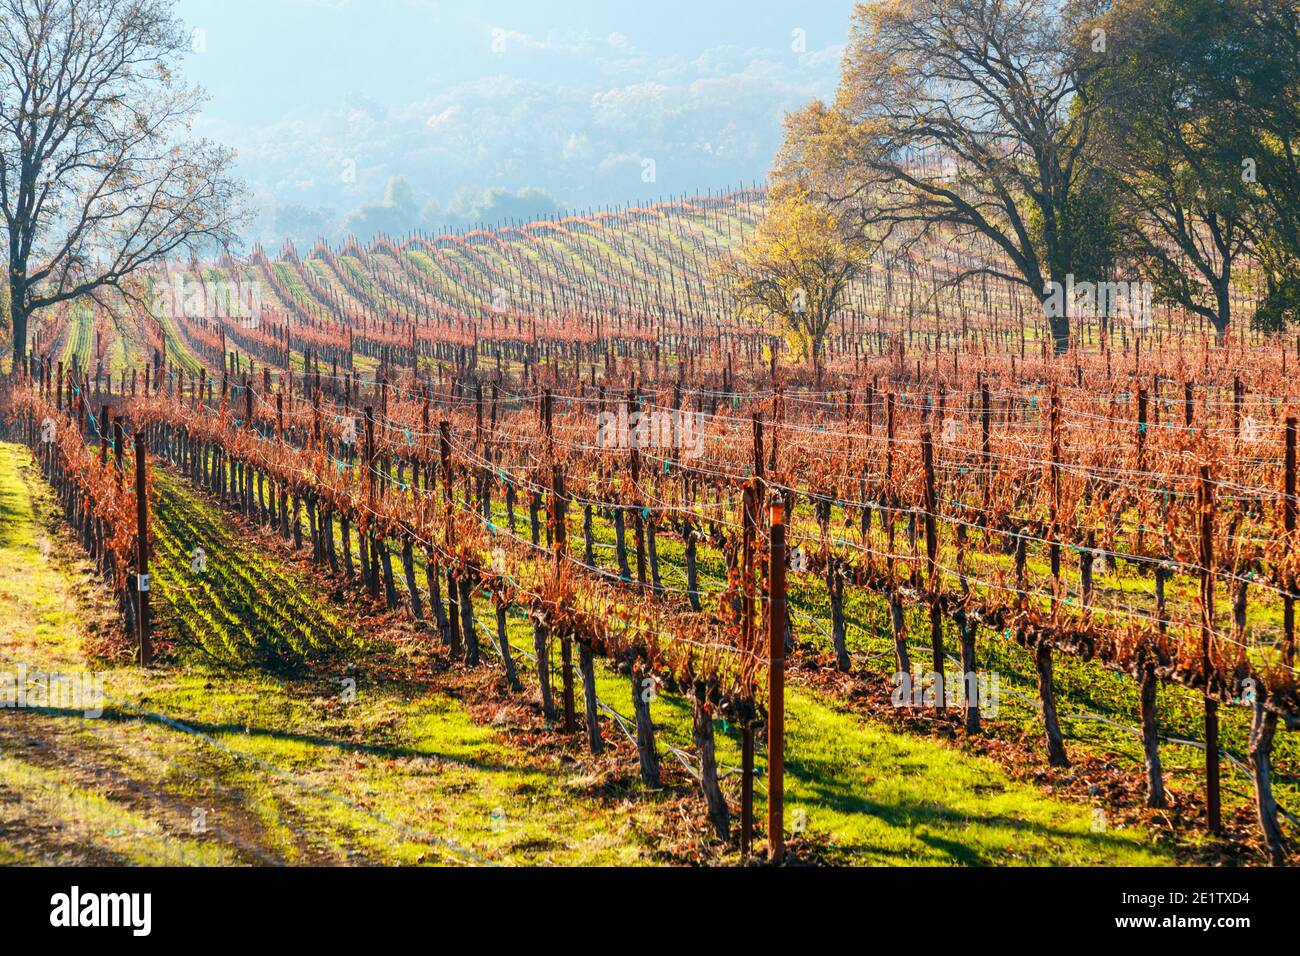 Rows of  autumn grapevines on hillside Napa Valley California Stock Photo